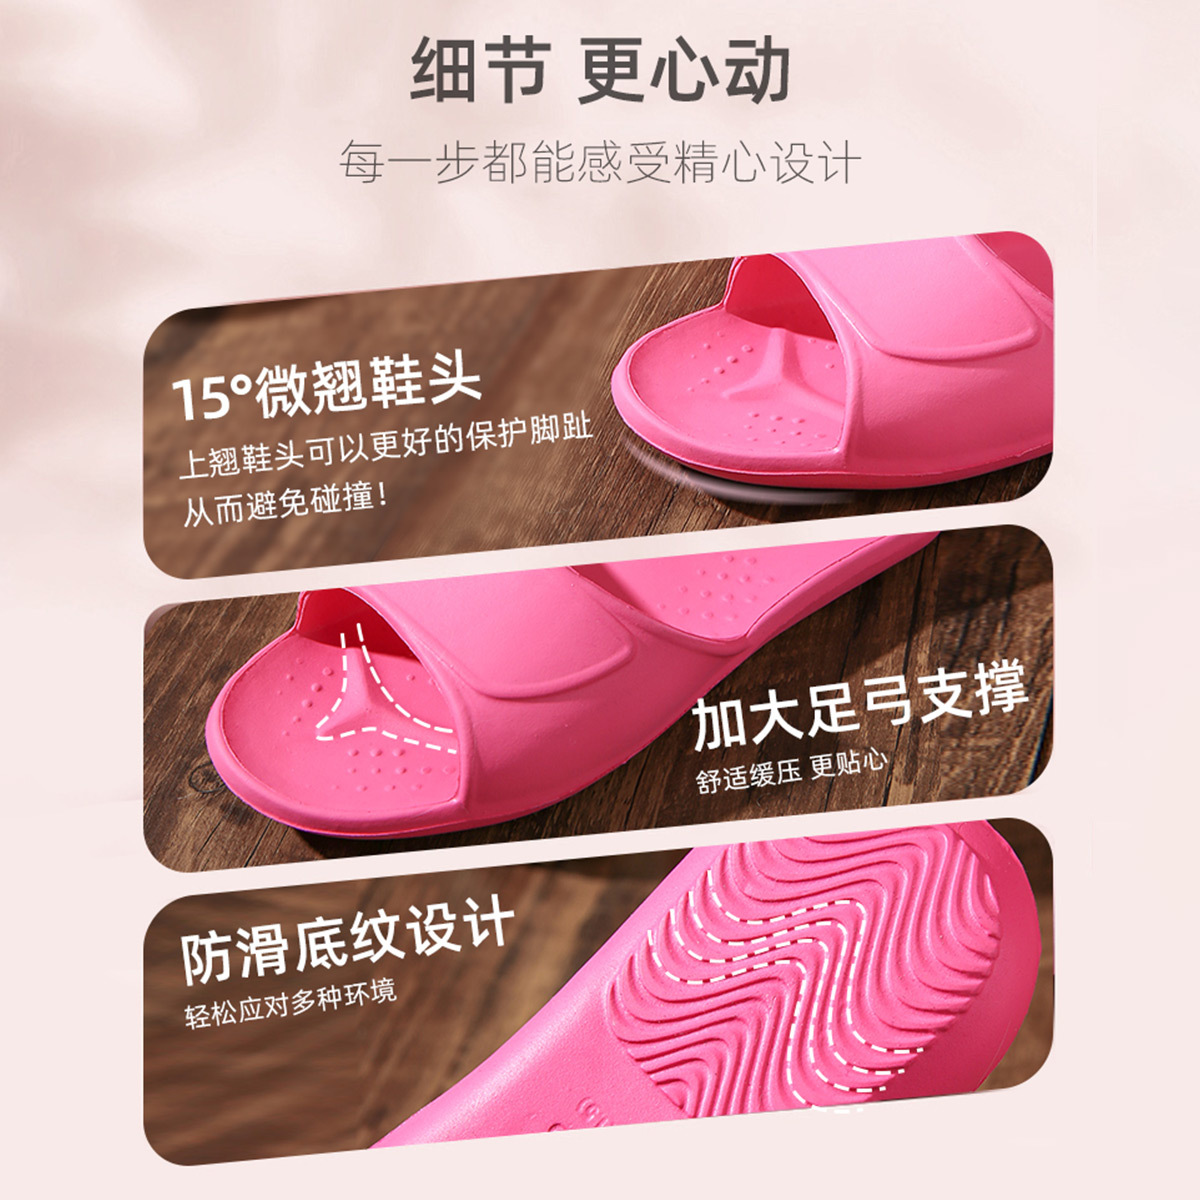 Jishijia Couple Slippers Home Indoor Slippers Summer Female EVA Male Bathroom Anti slip Slippers Factory